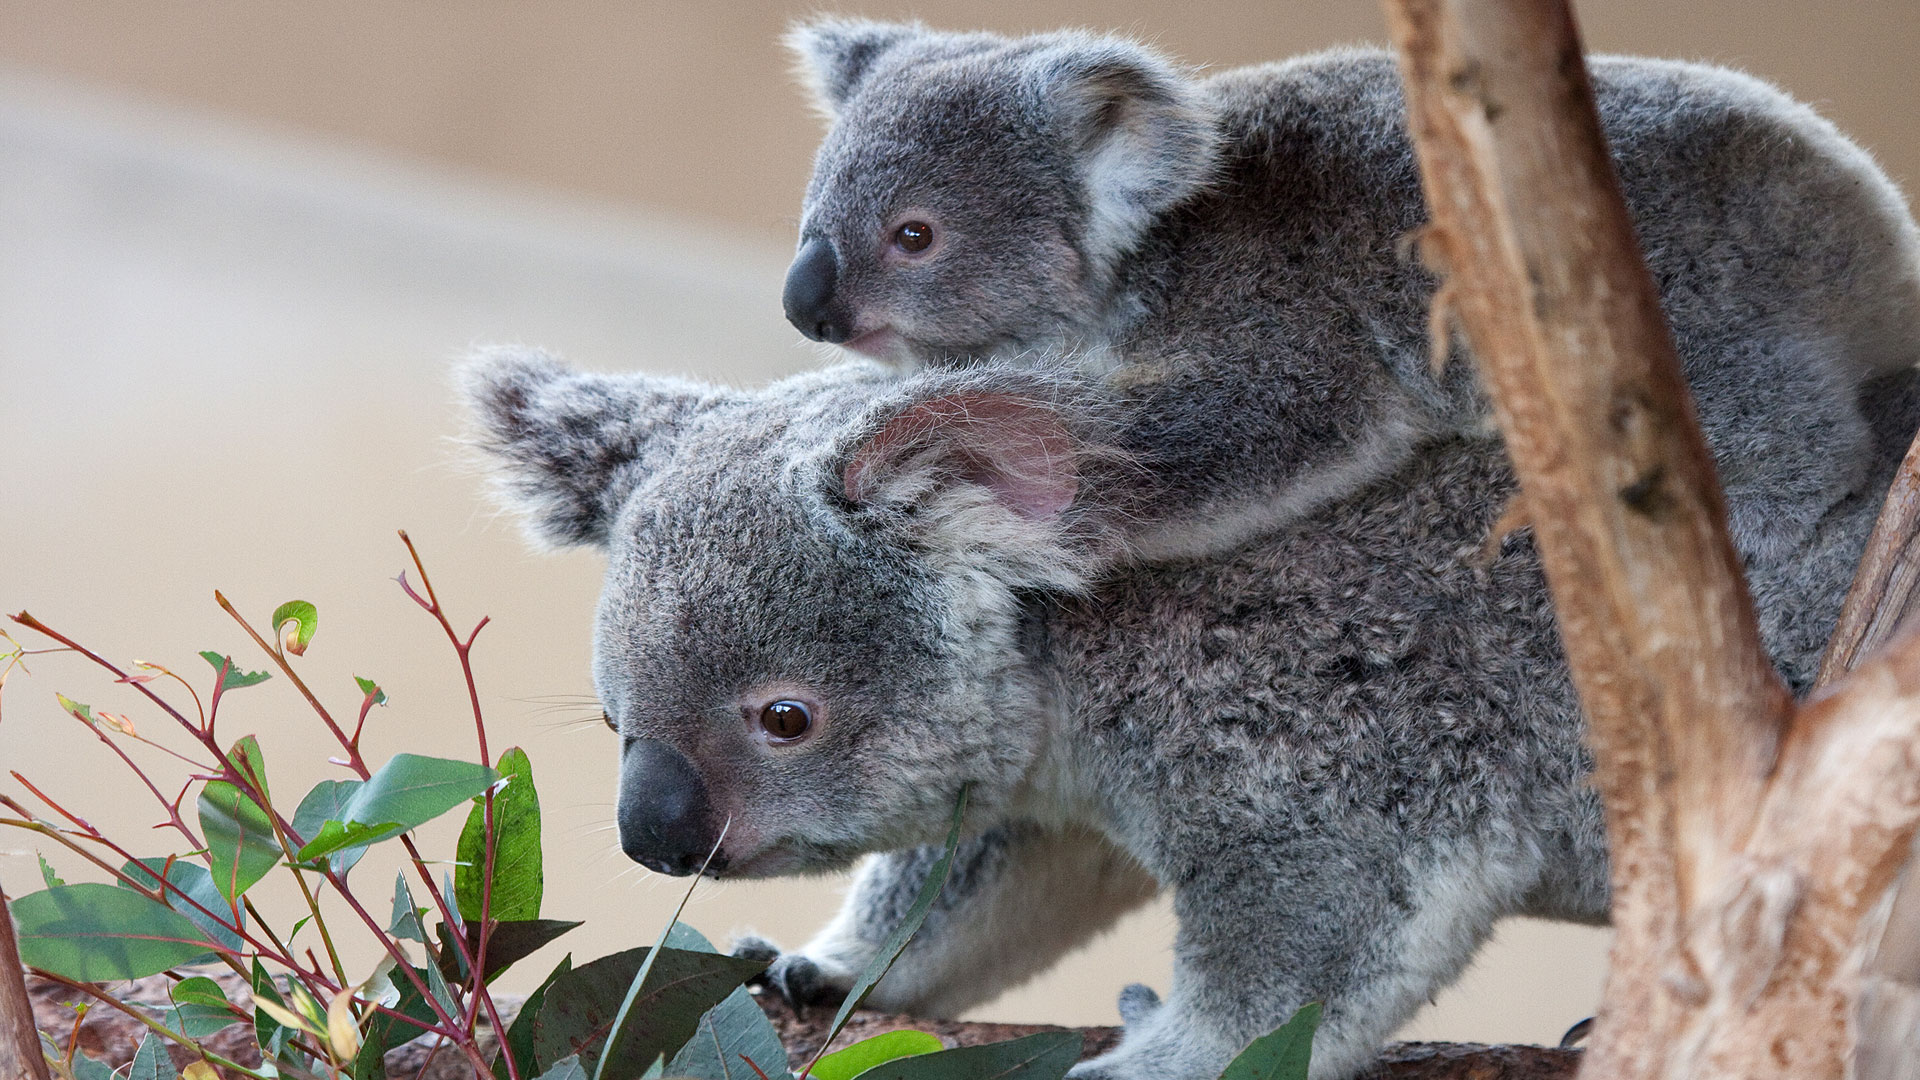 Bébé koala sur le dos de maman